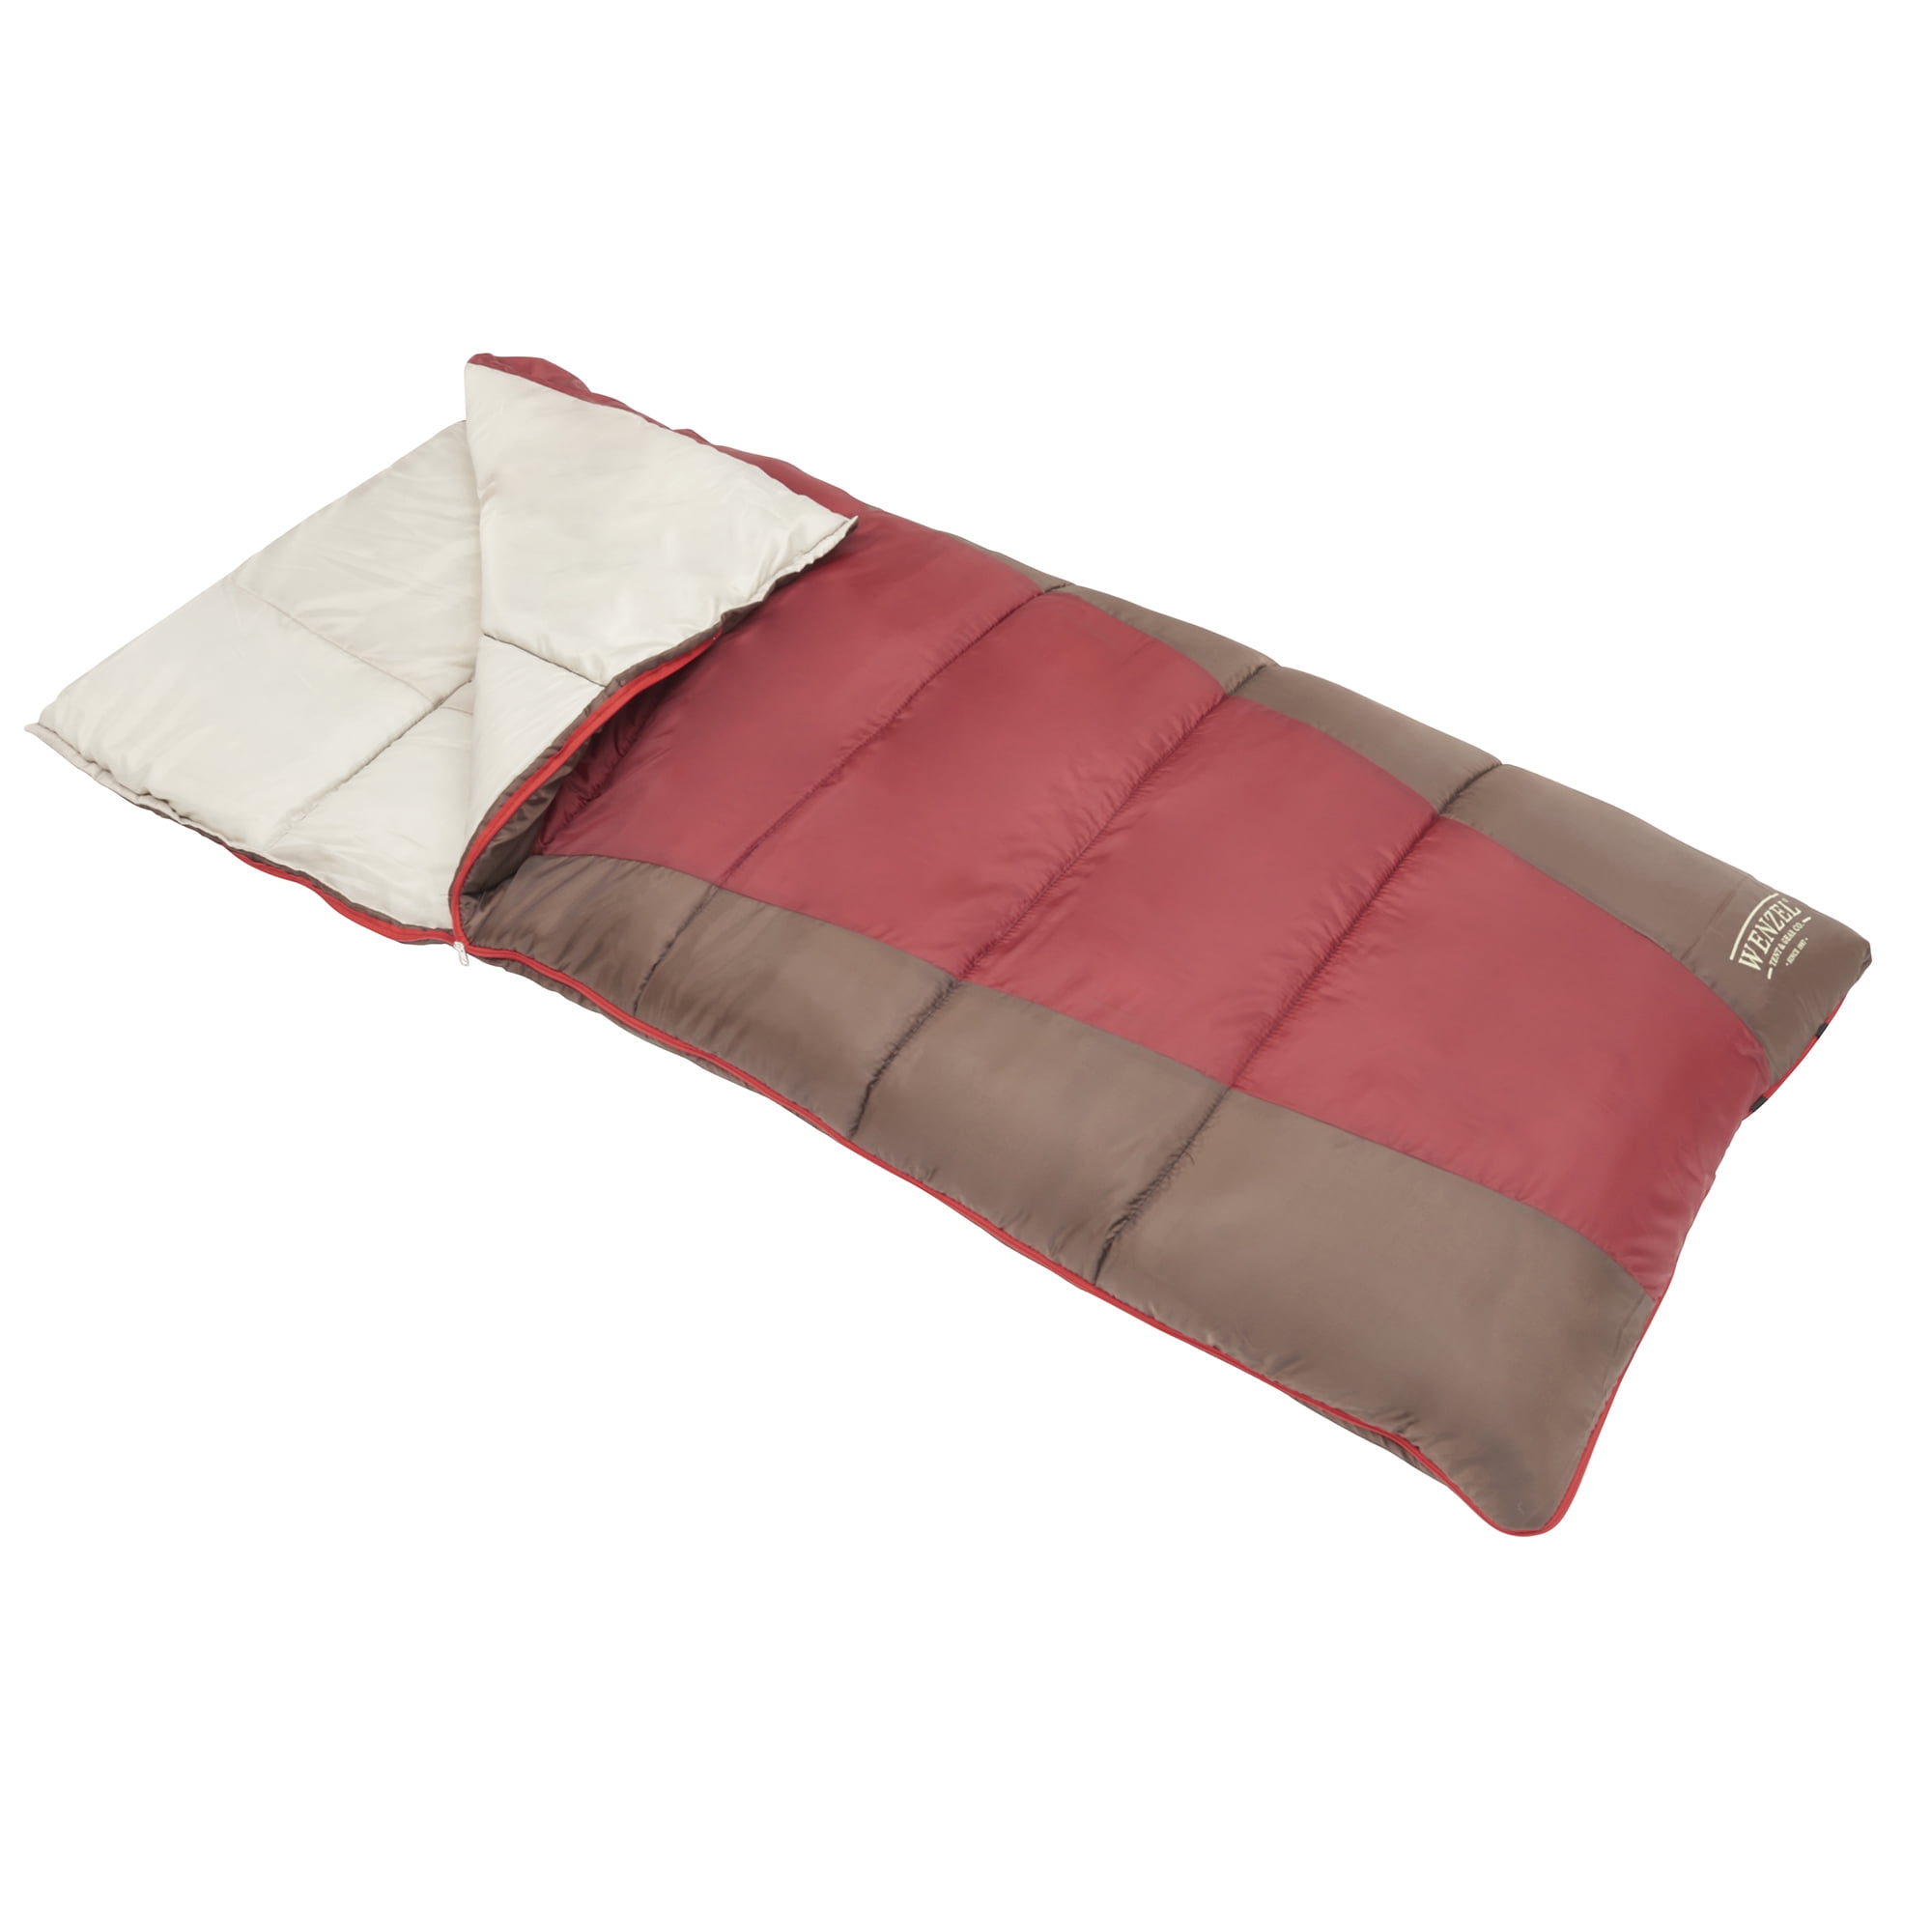 Wenzel Lakeside 40 - 50 Degree Rectangular Sleeping Bag, Red, 78